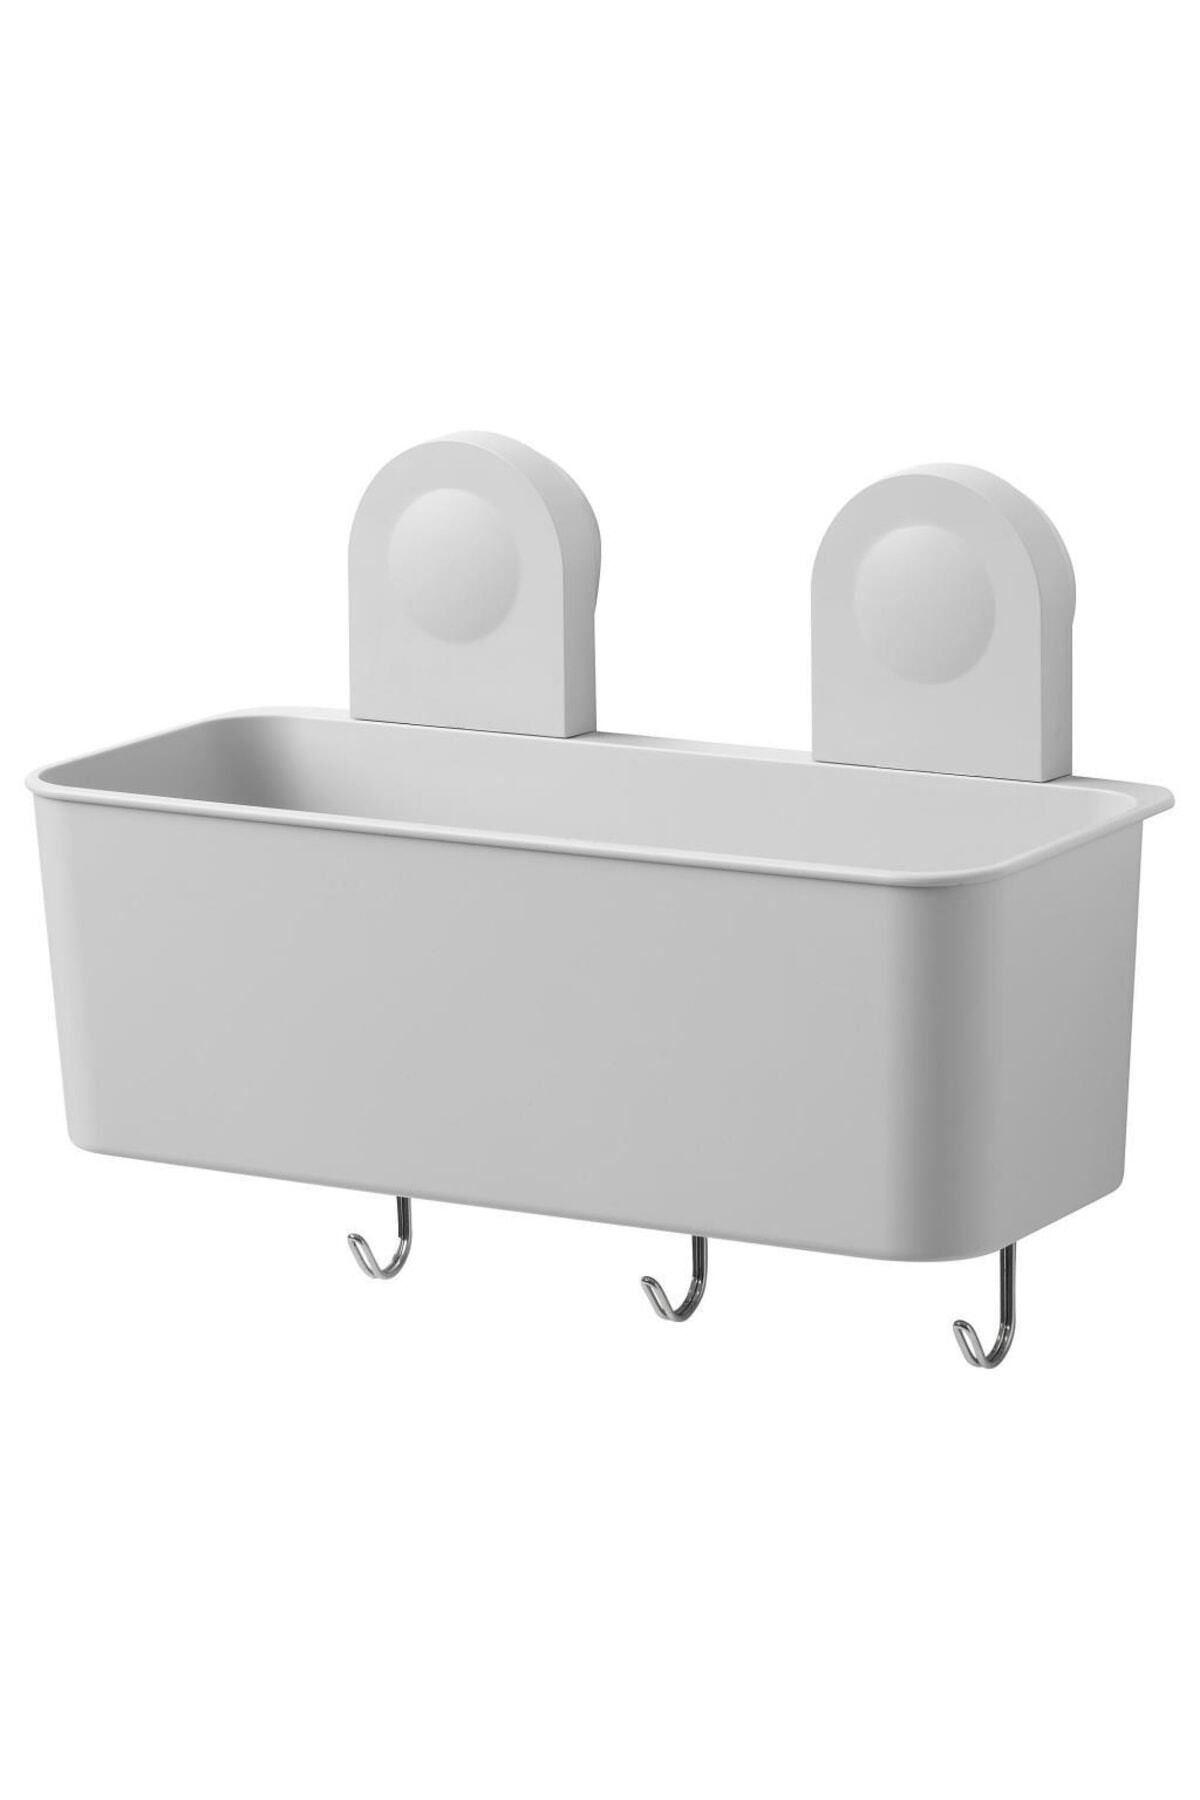 IKEA Ranen Gri 26x21 Cm Duş Sepeti Banyo Düzenleyici Kutu